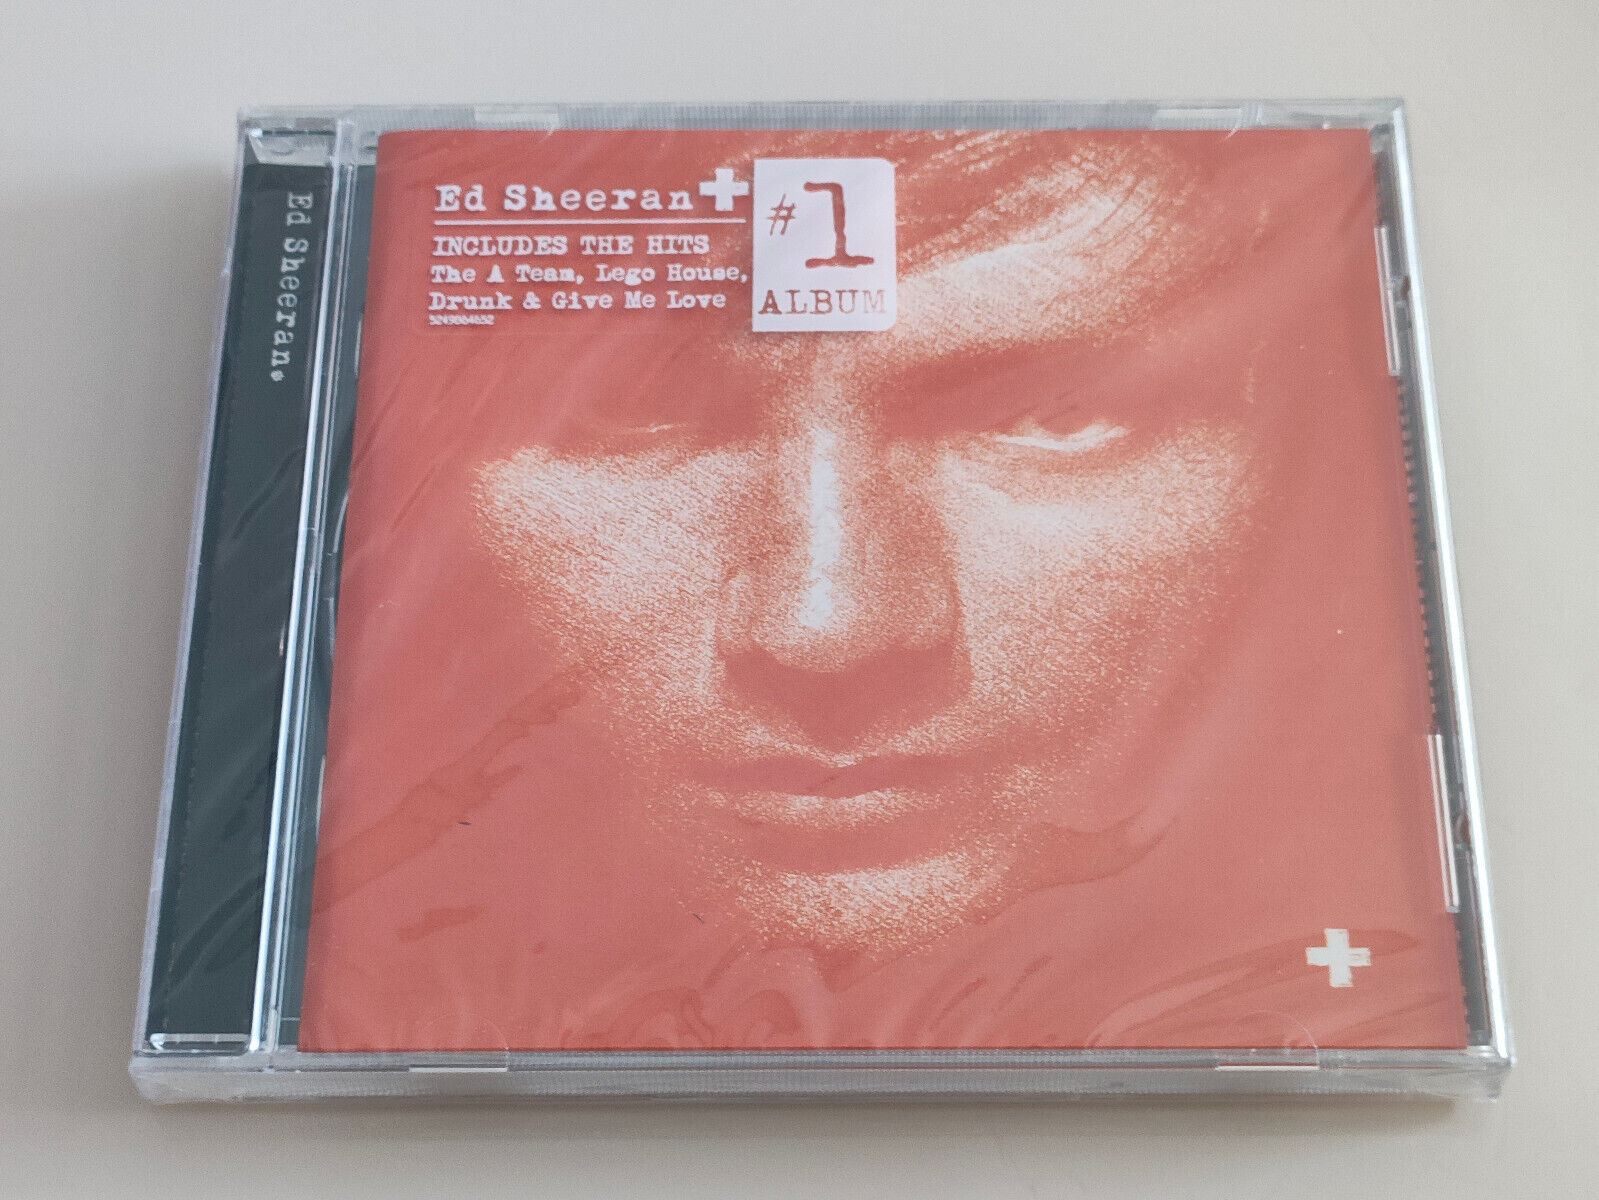 + Album by Ed Sheeran (CD,2011) AU Edition